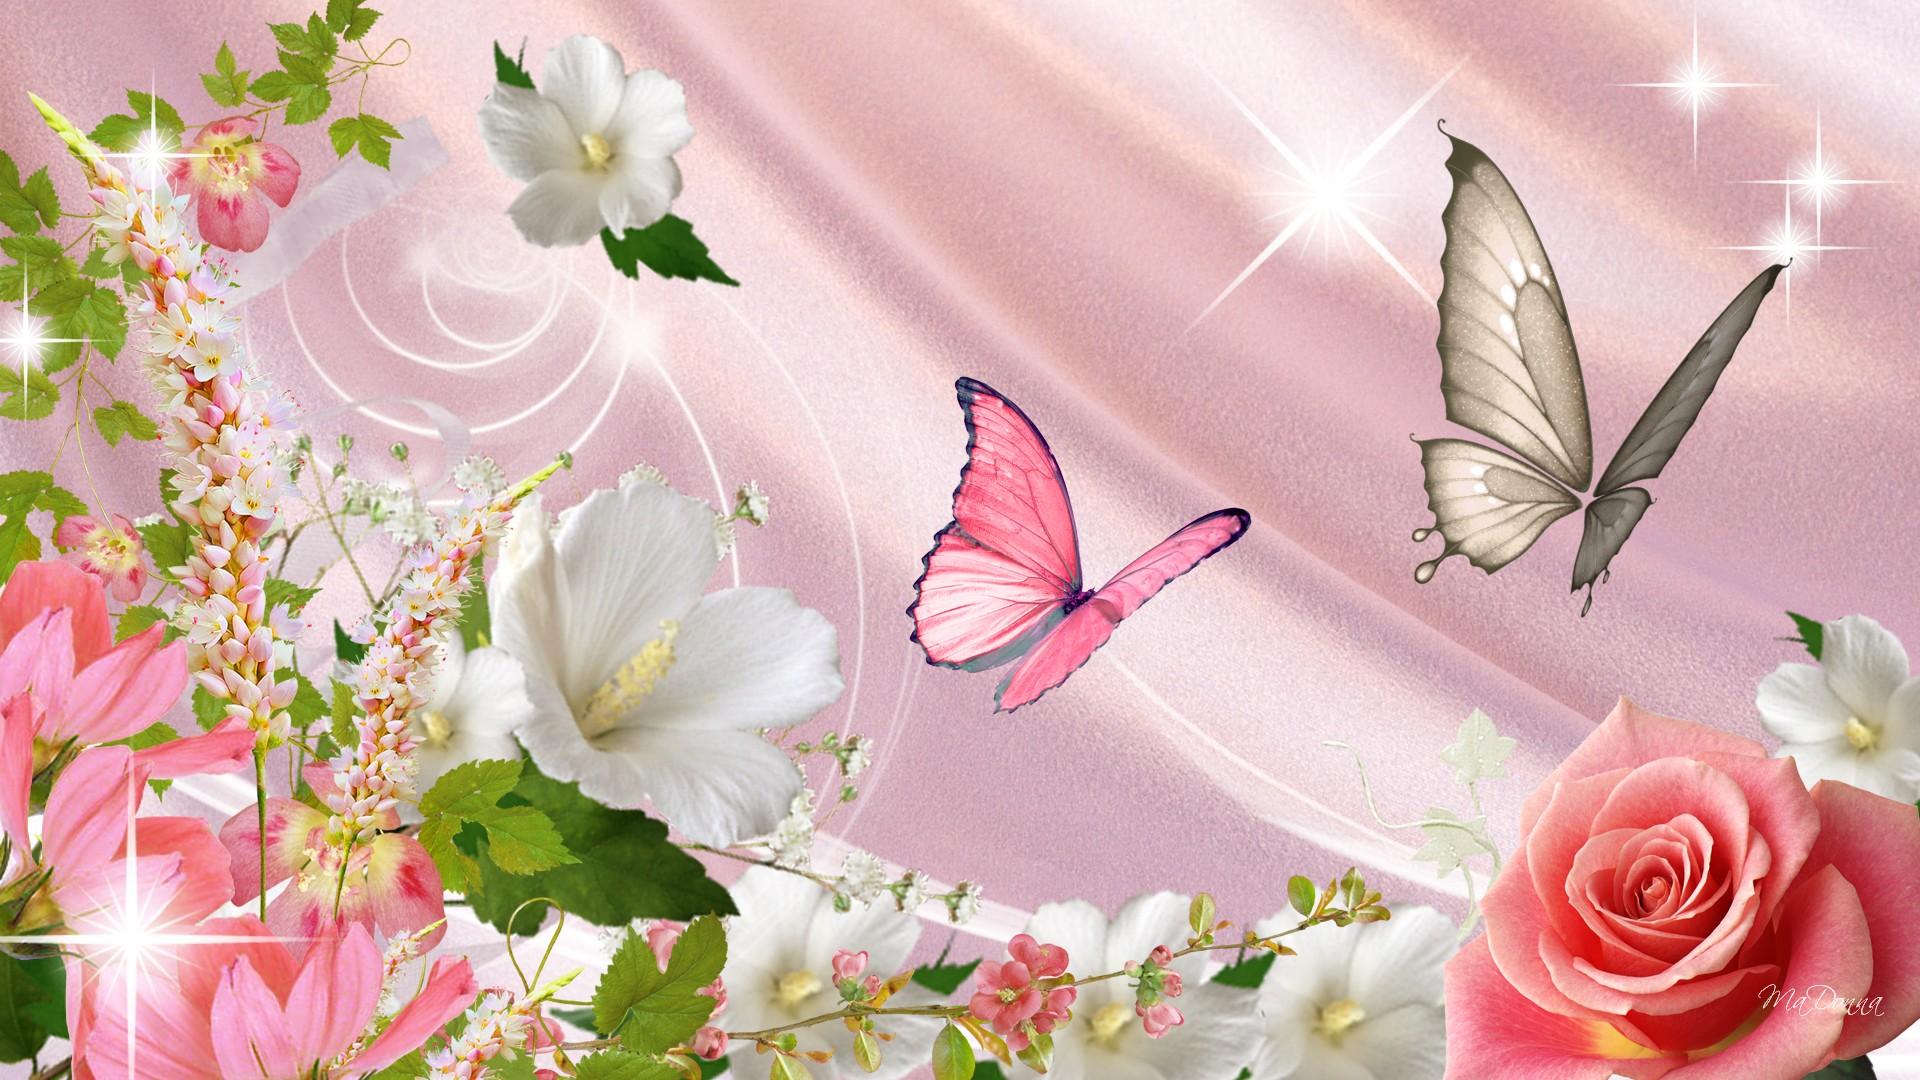 Butterfly And Flower Wallpaper - WallpaperSafari